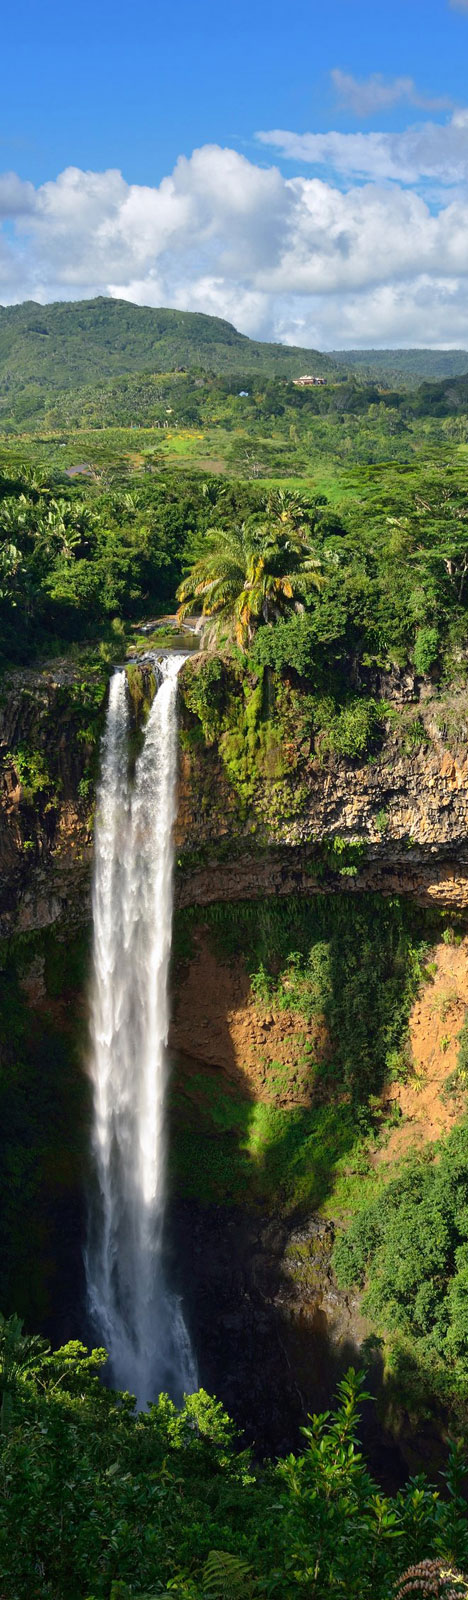 chamarel falls travel facts